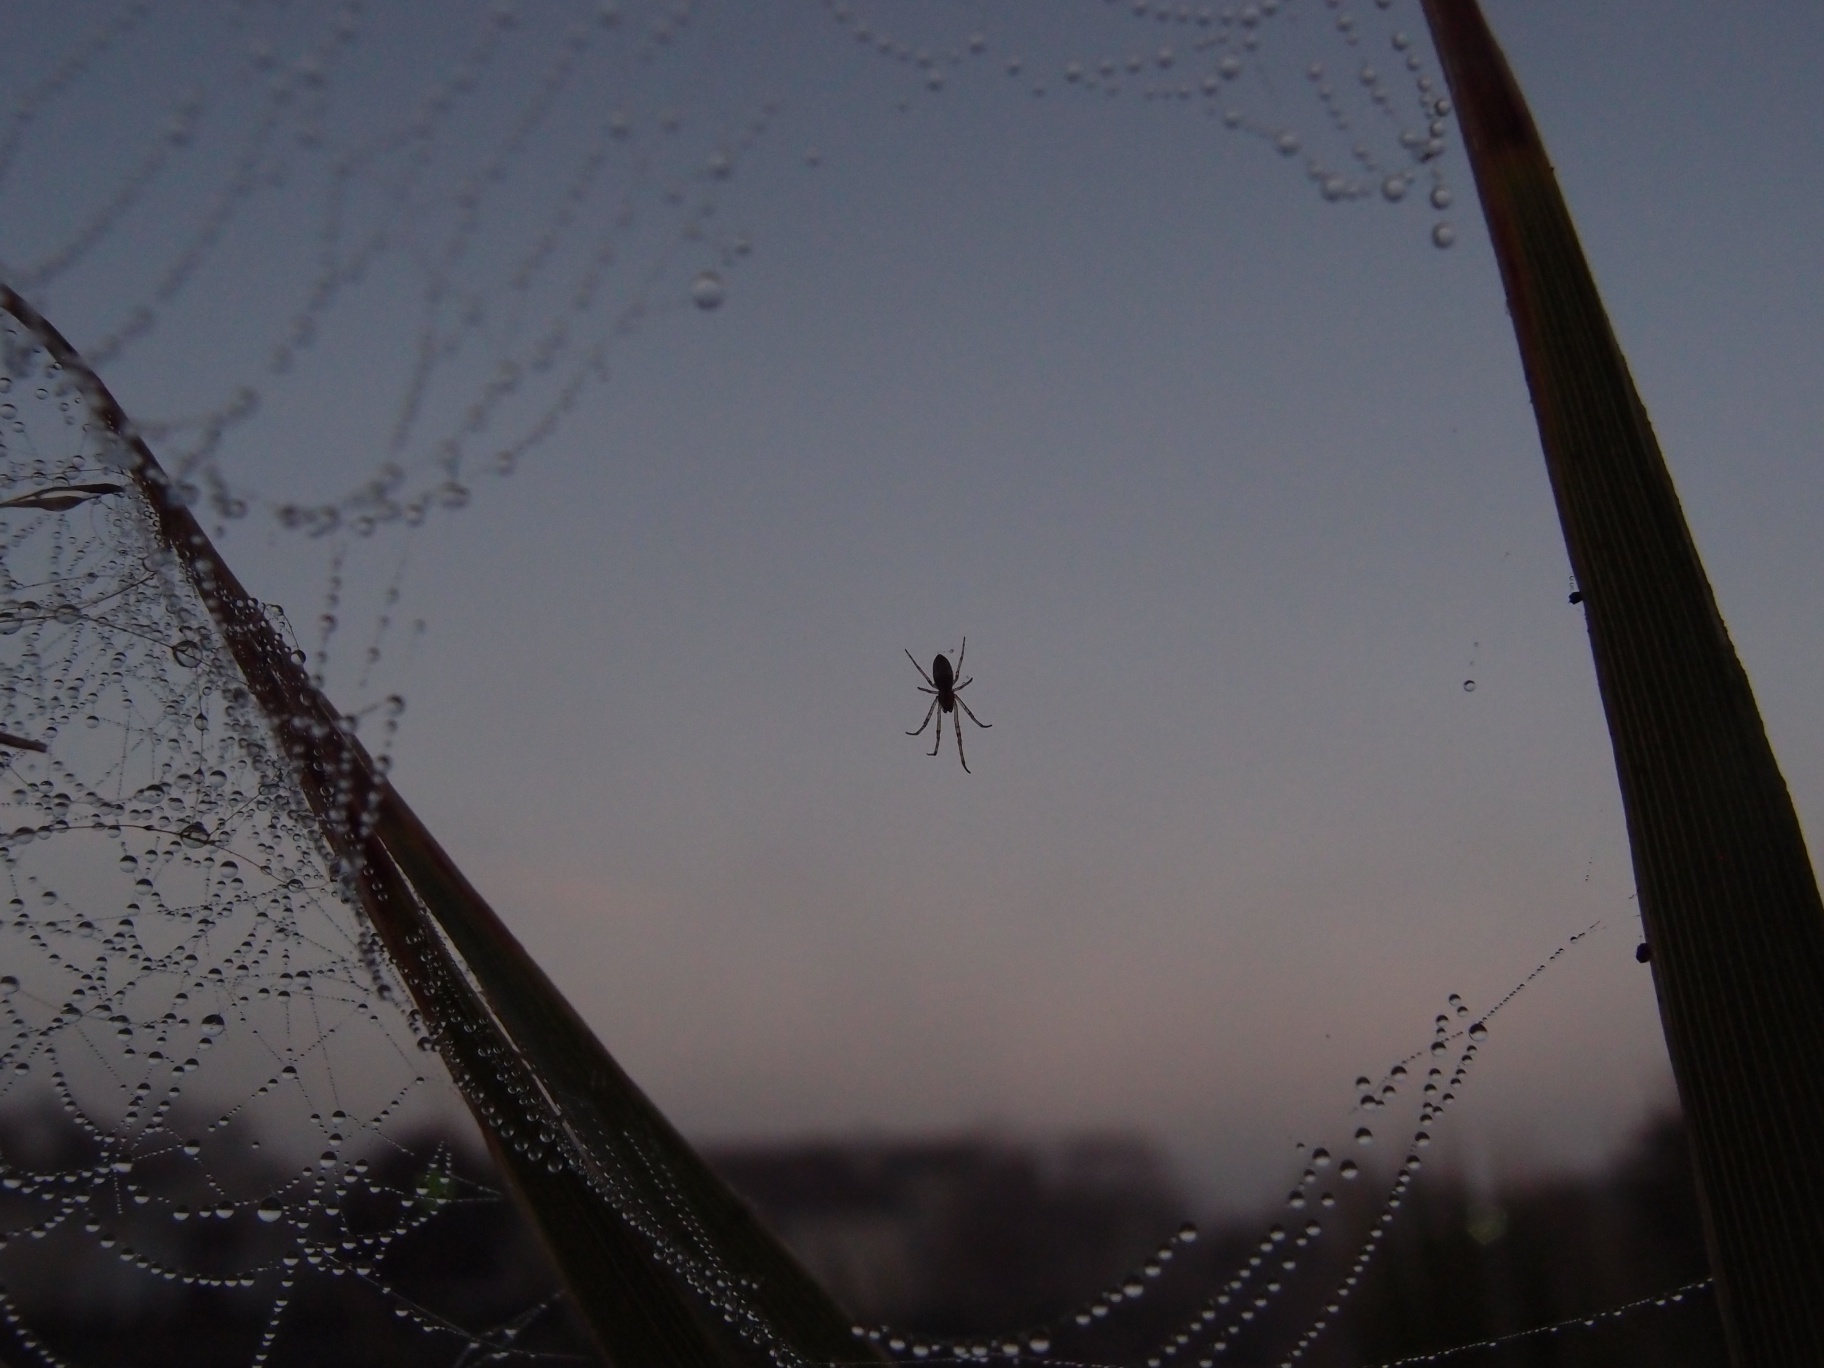 Spider silhouette in web.